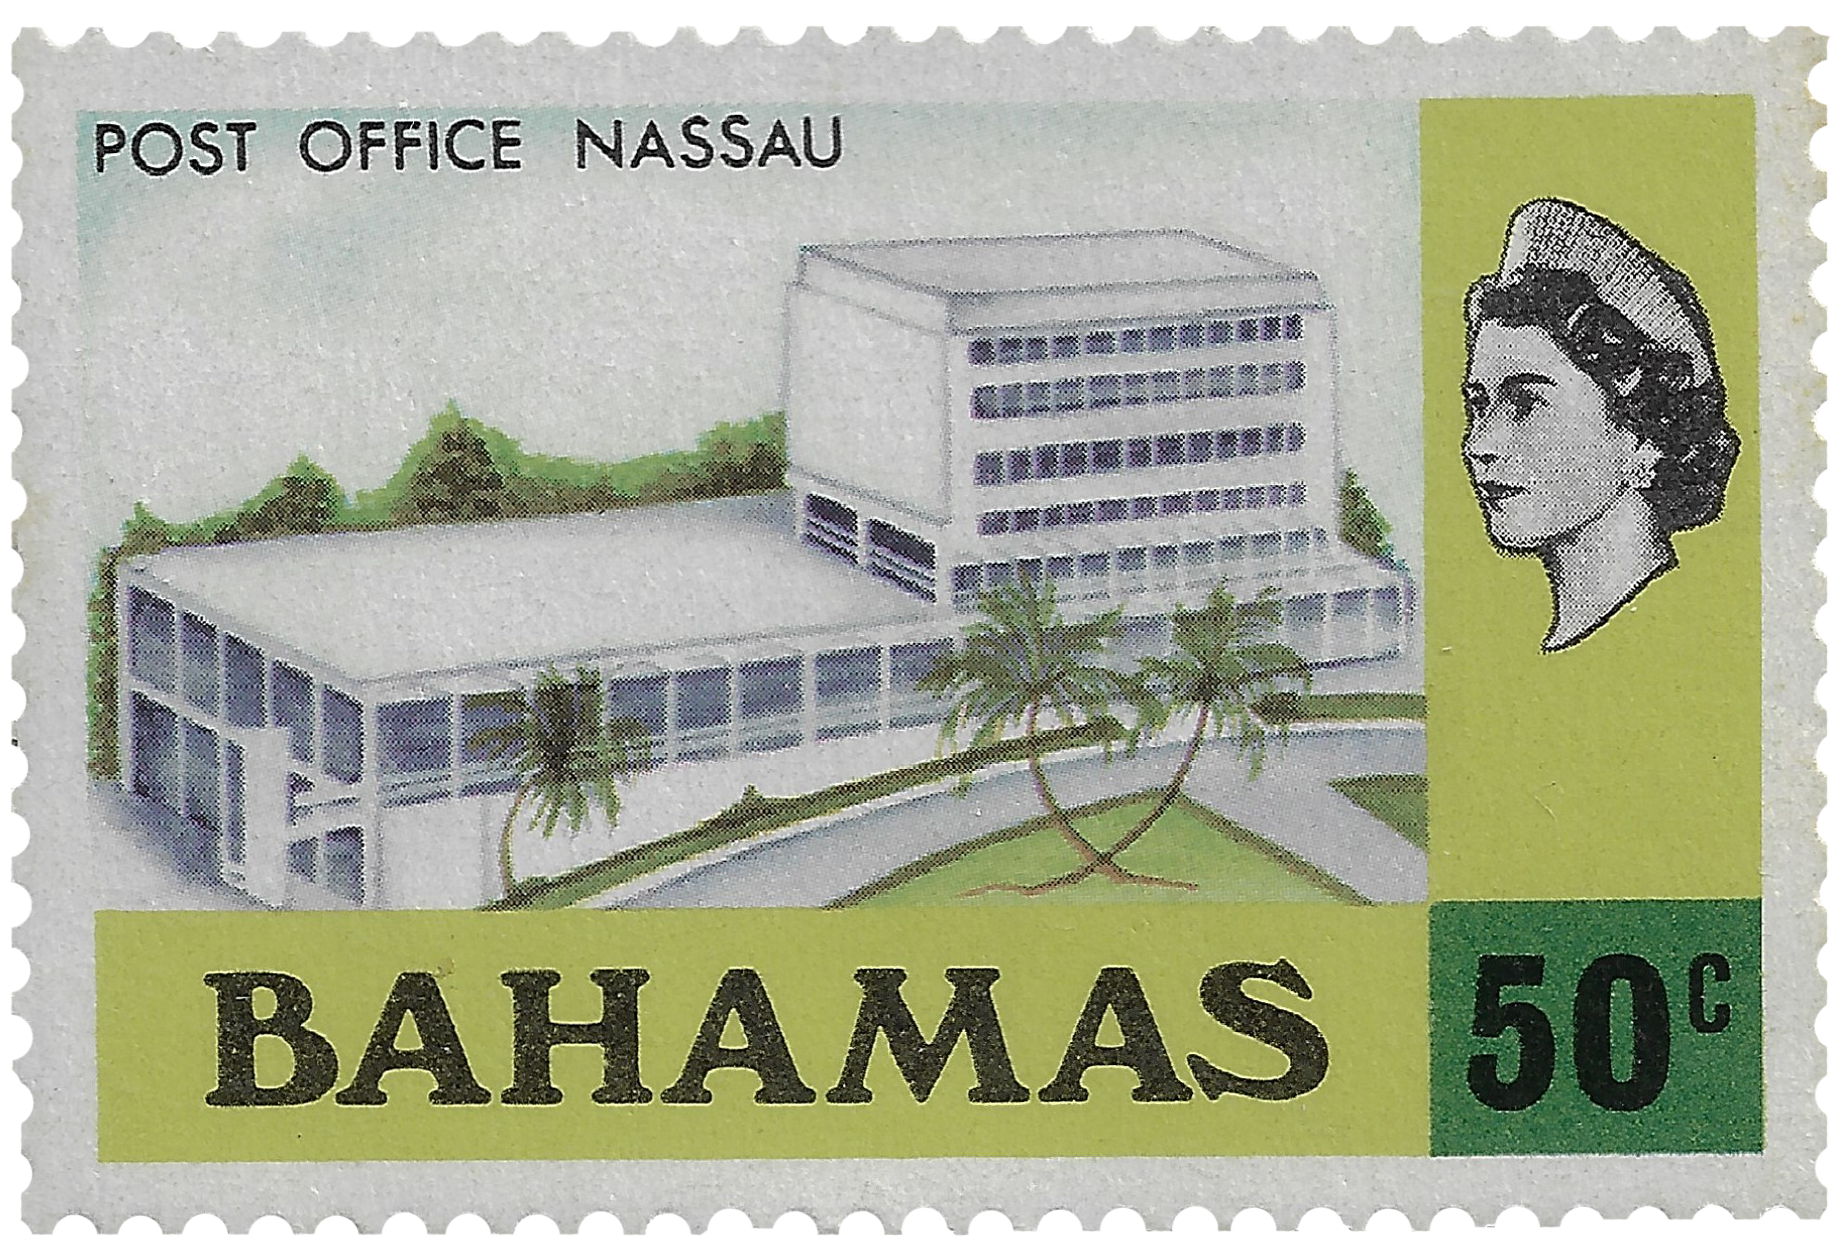 50c 1971, Post Office Nassau